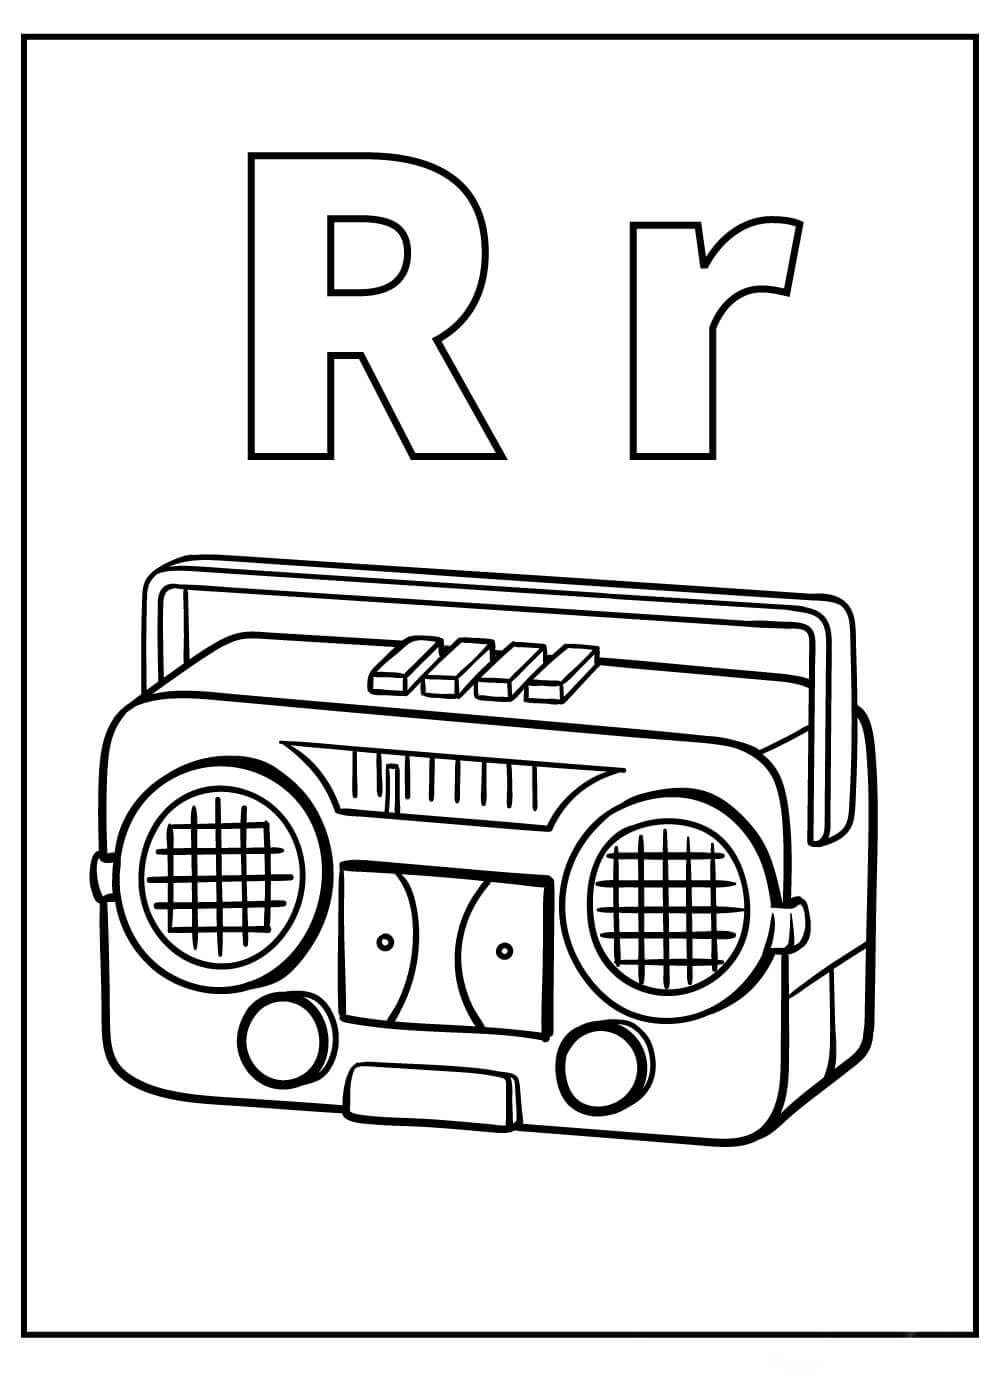 Desenhos de Letra R e Radio para colorir